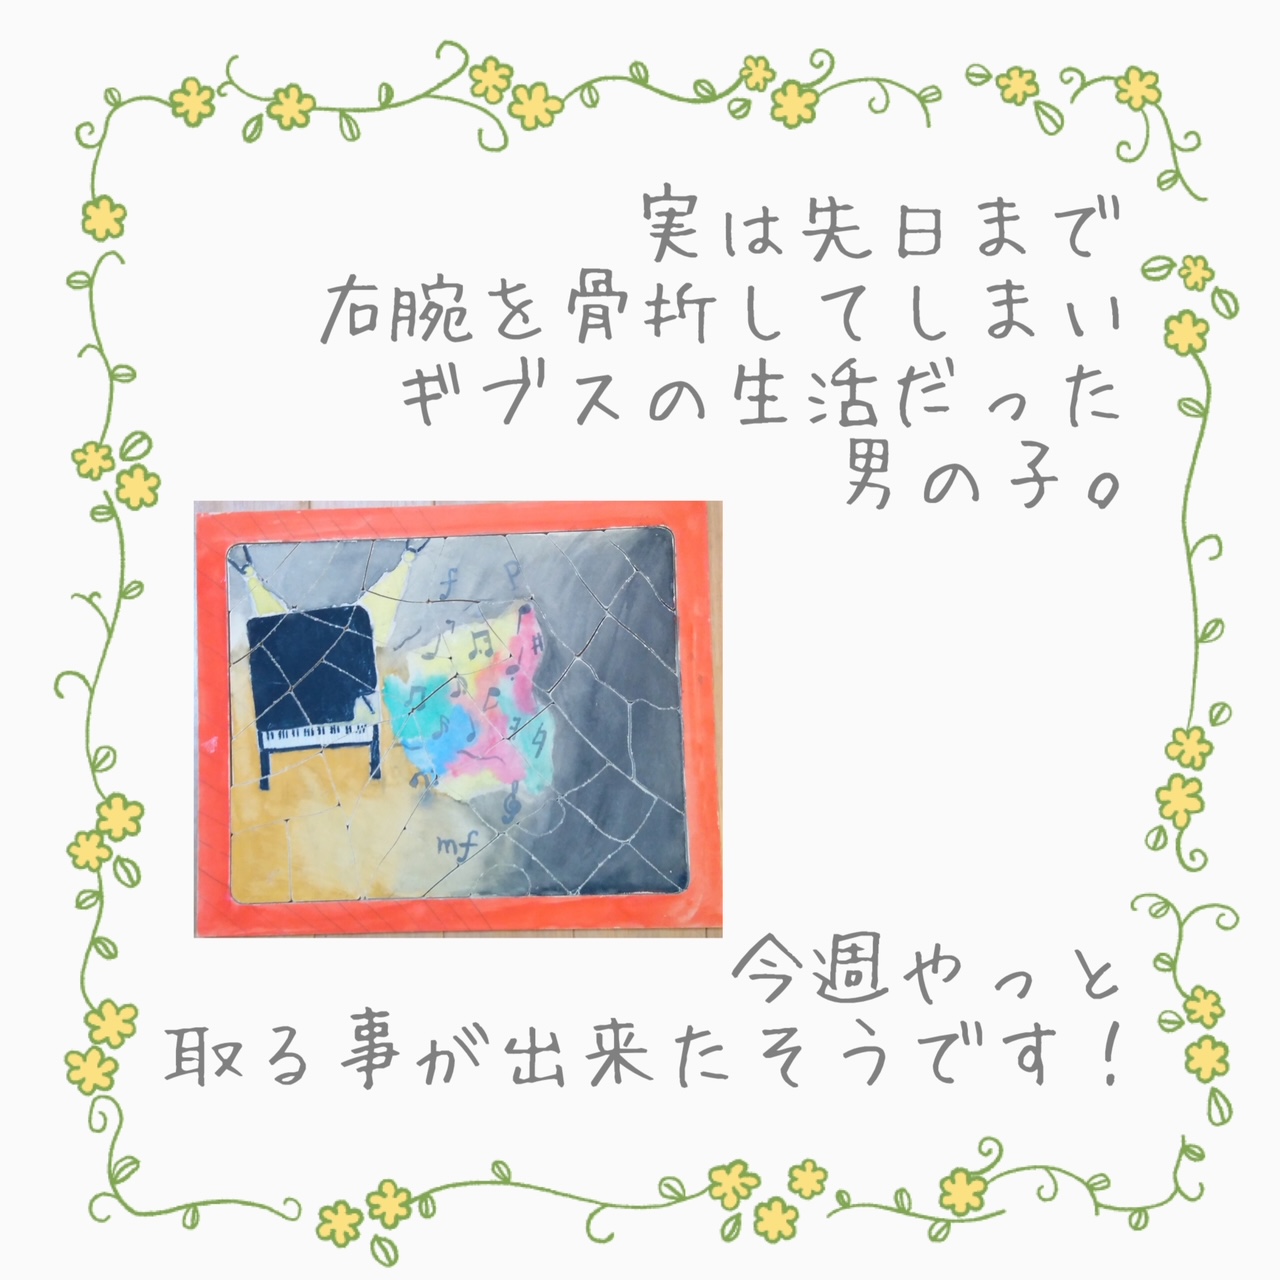 image108.jpeg alt="Misuzu Music Houseにお通いの男の子の作品です"